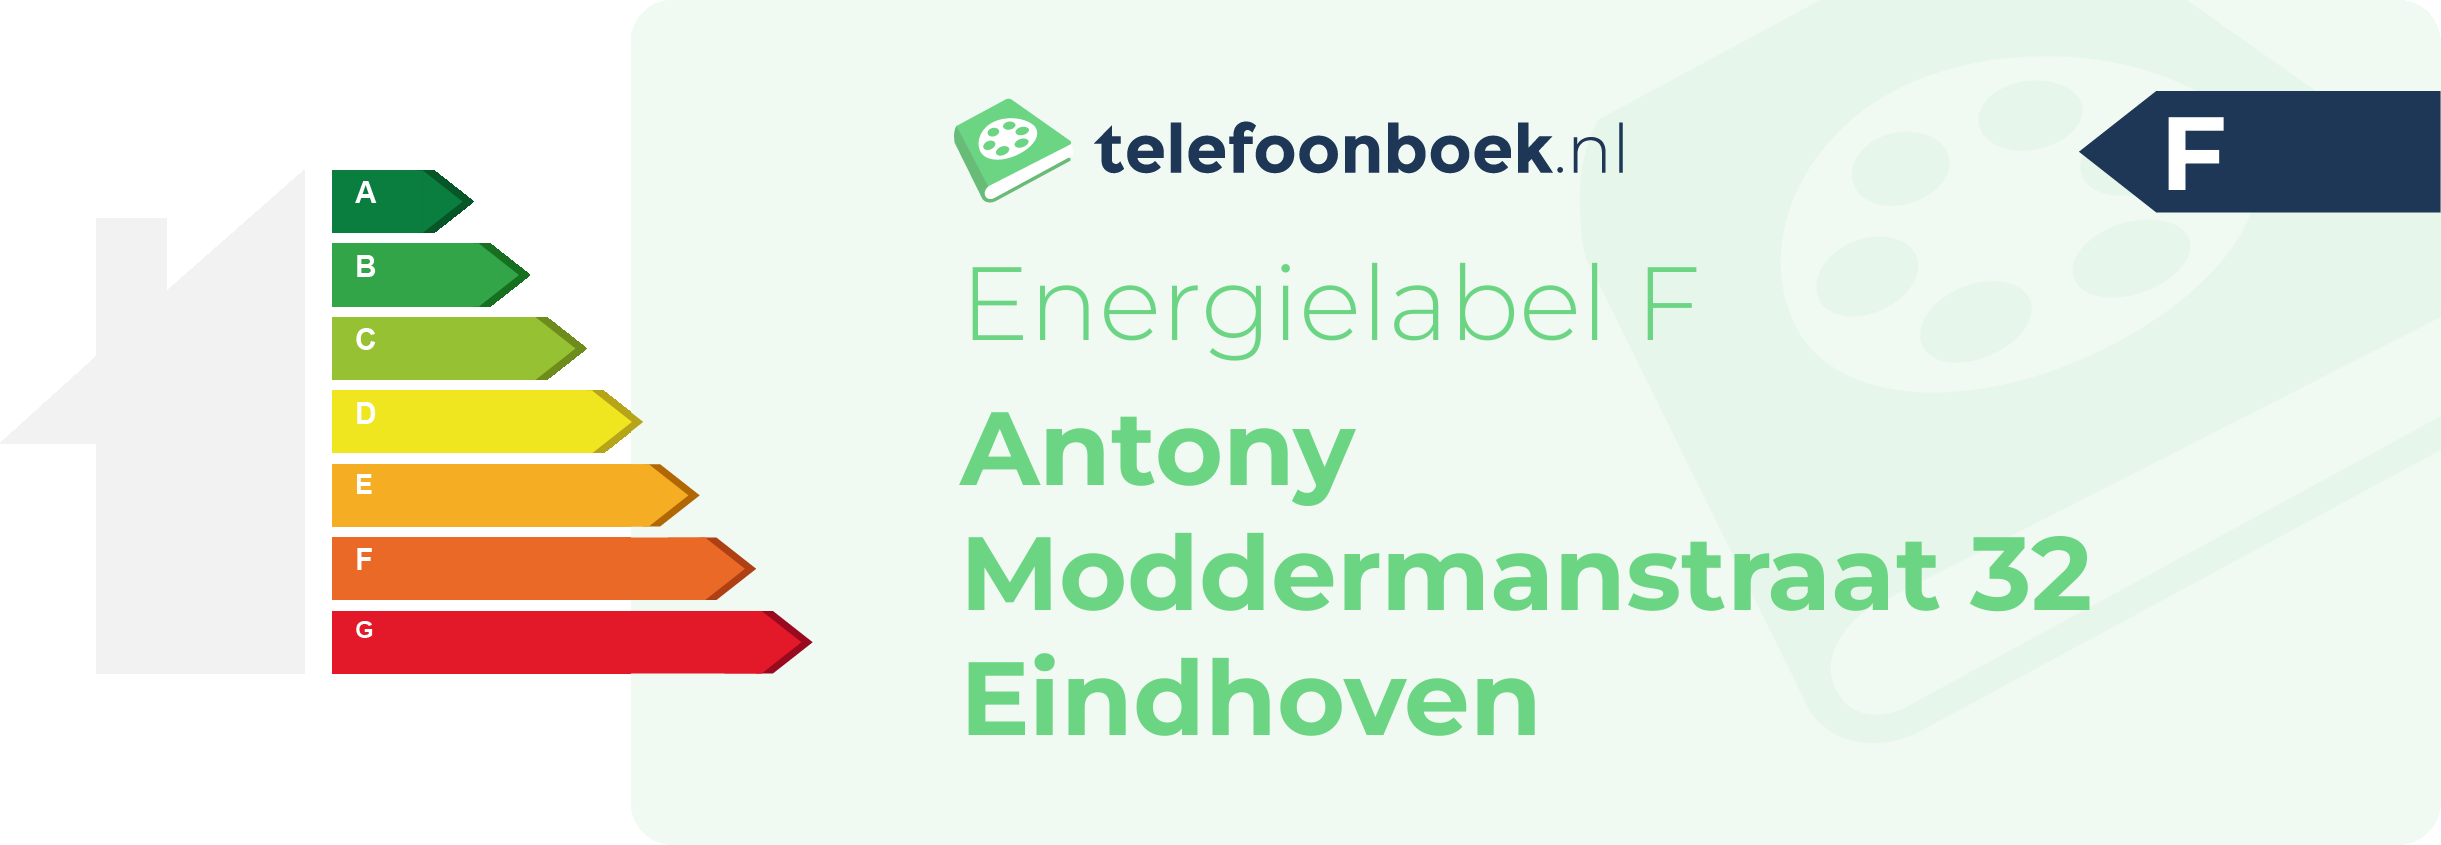 Energielabel Antony Moddermanstraat 32 Eindhoven